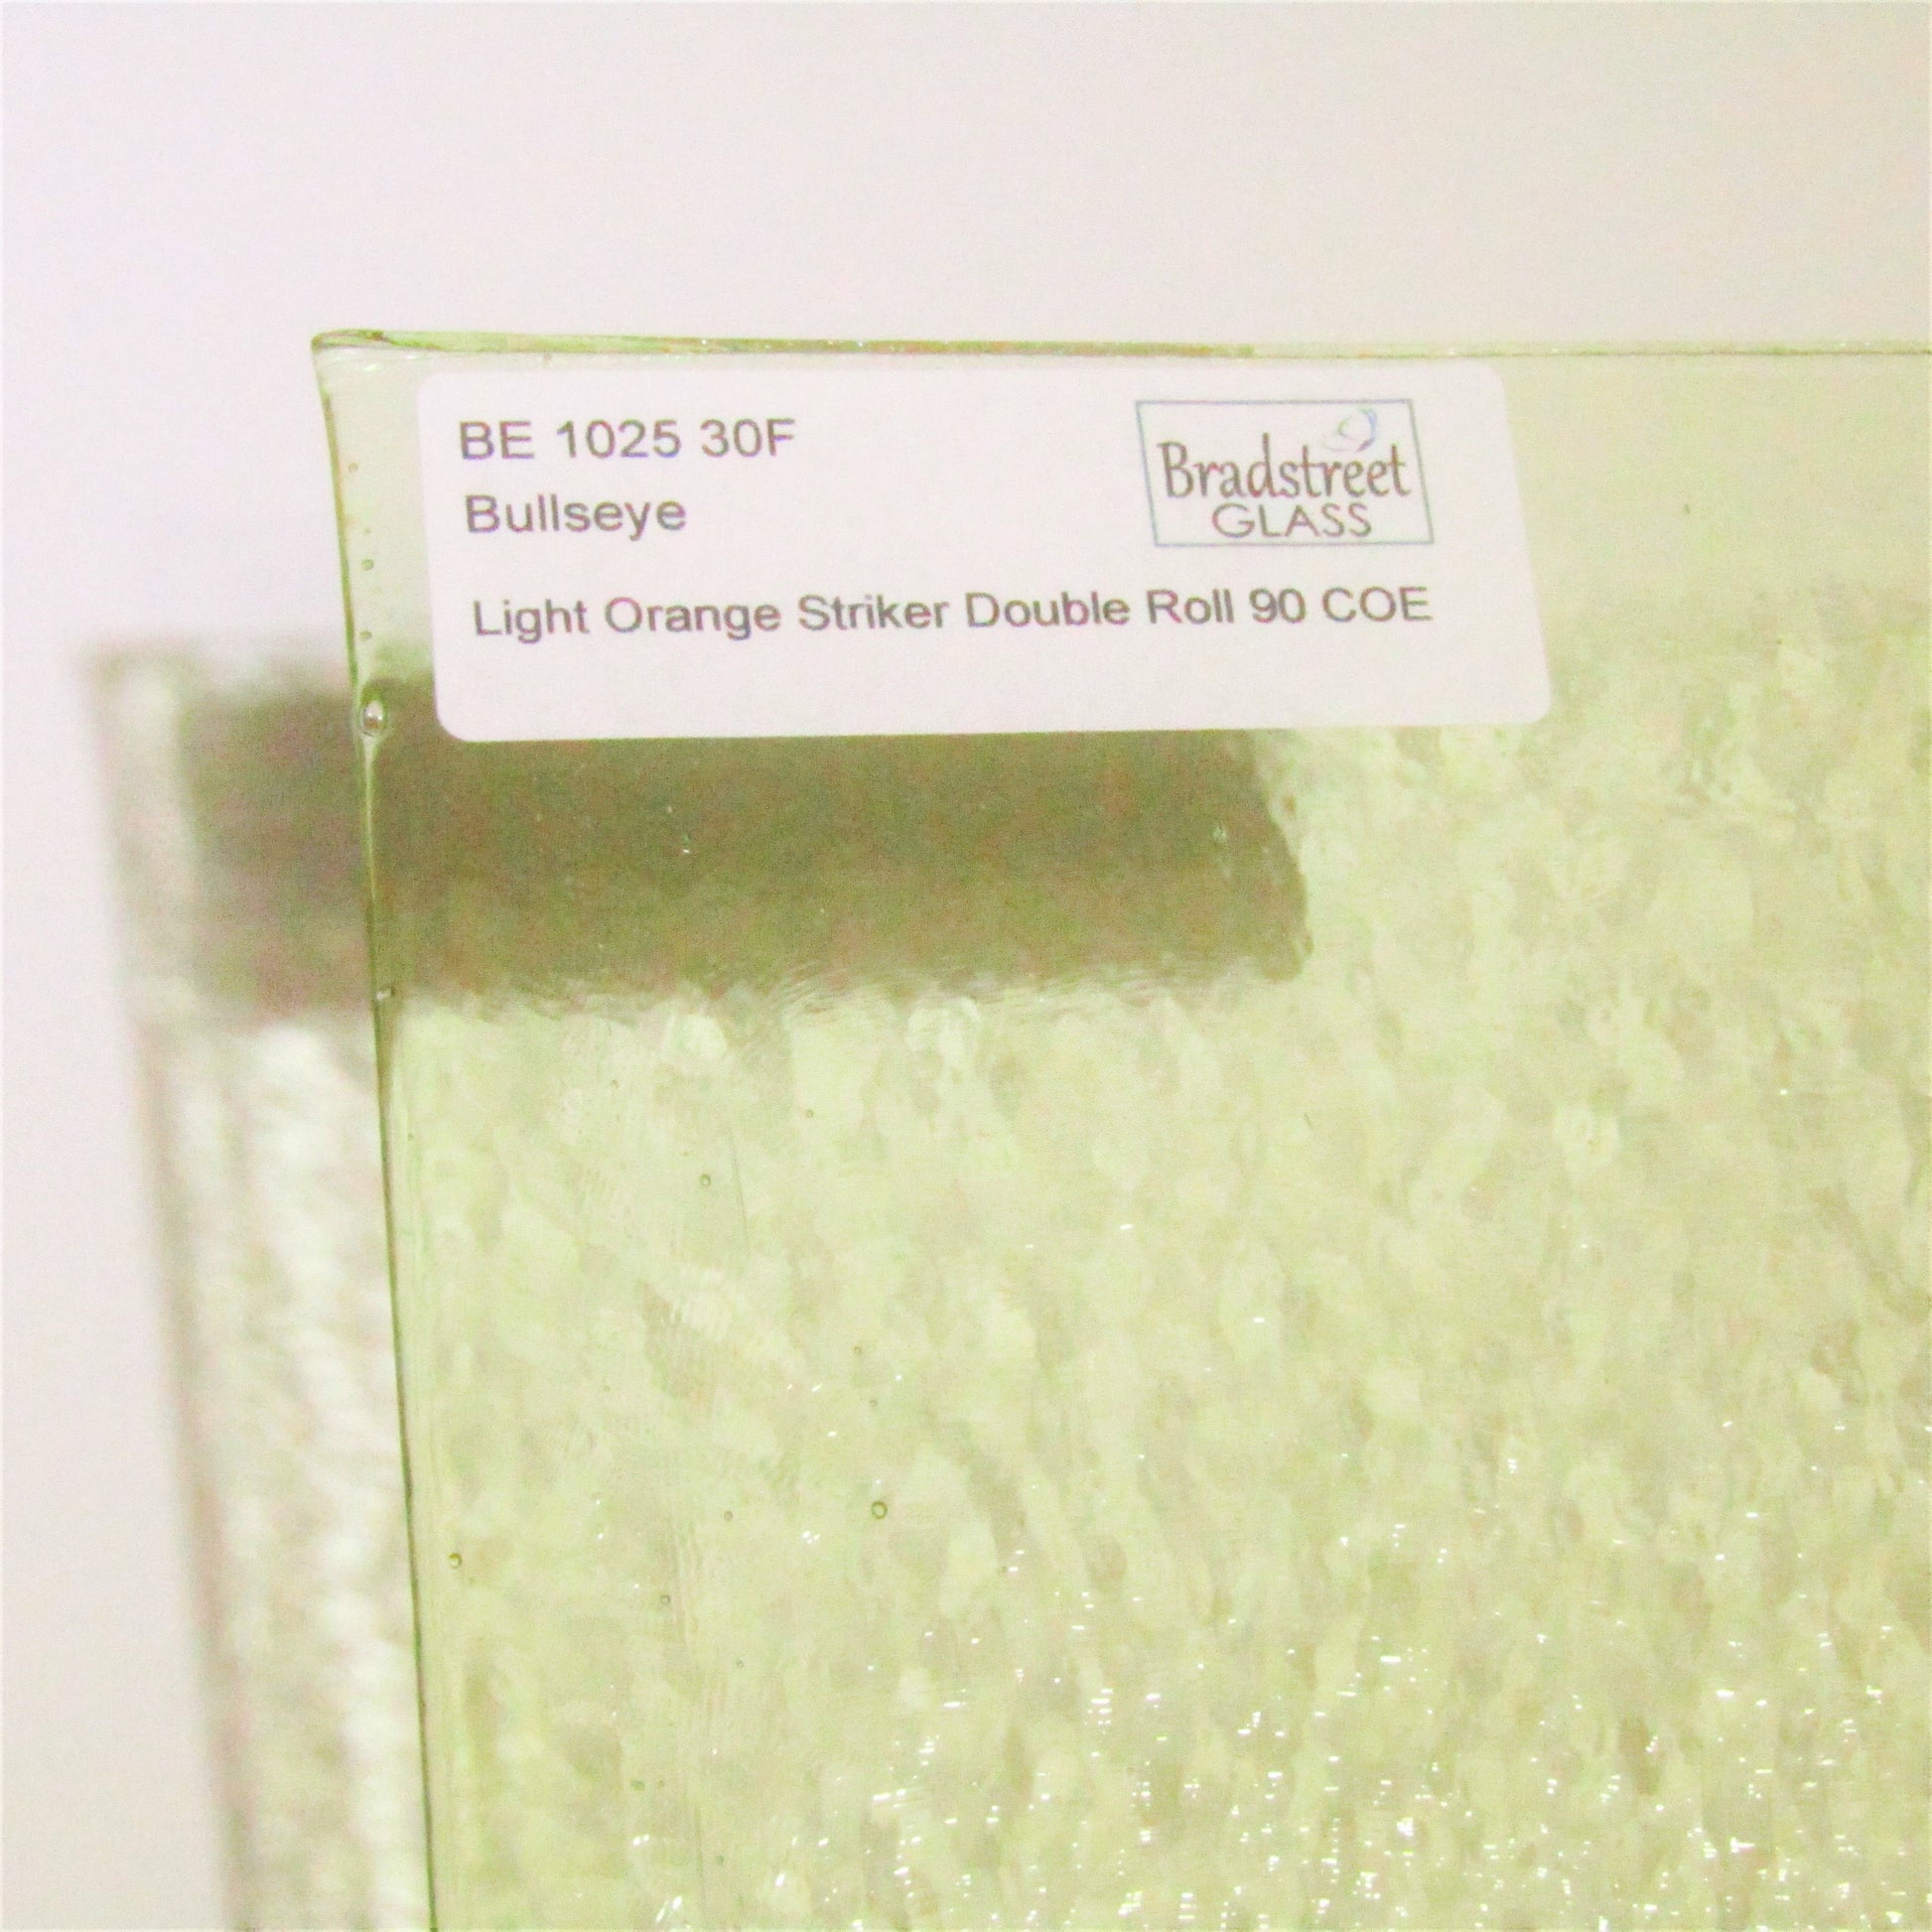 Light Orange Translucent Fusible Stained Glass Sheet 90 COE Bullseye 1025 30F